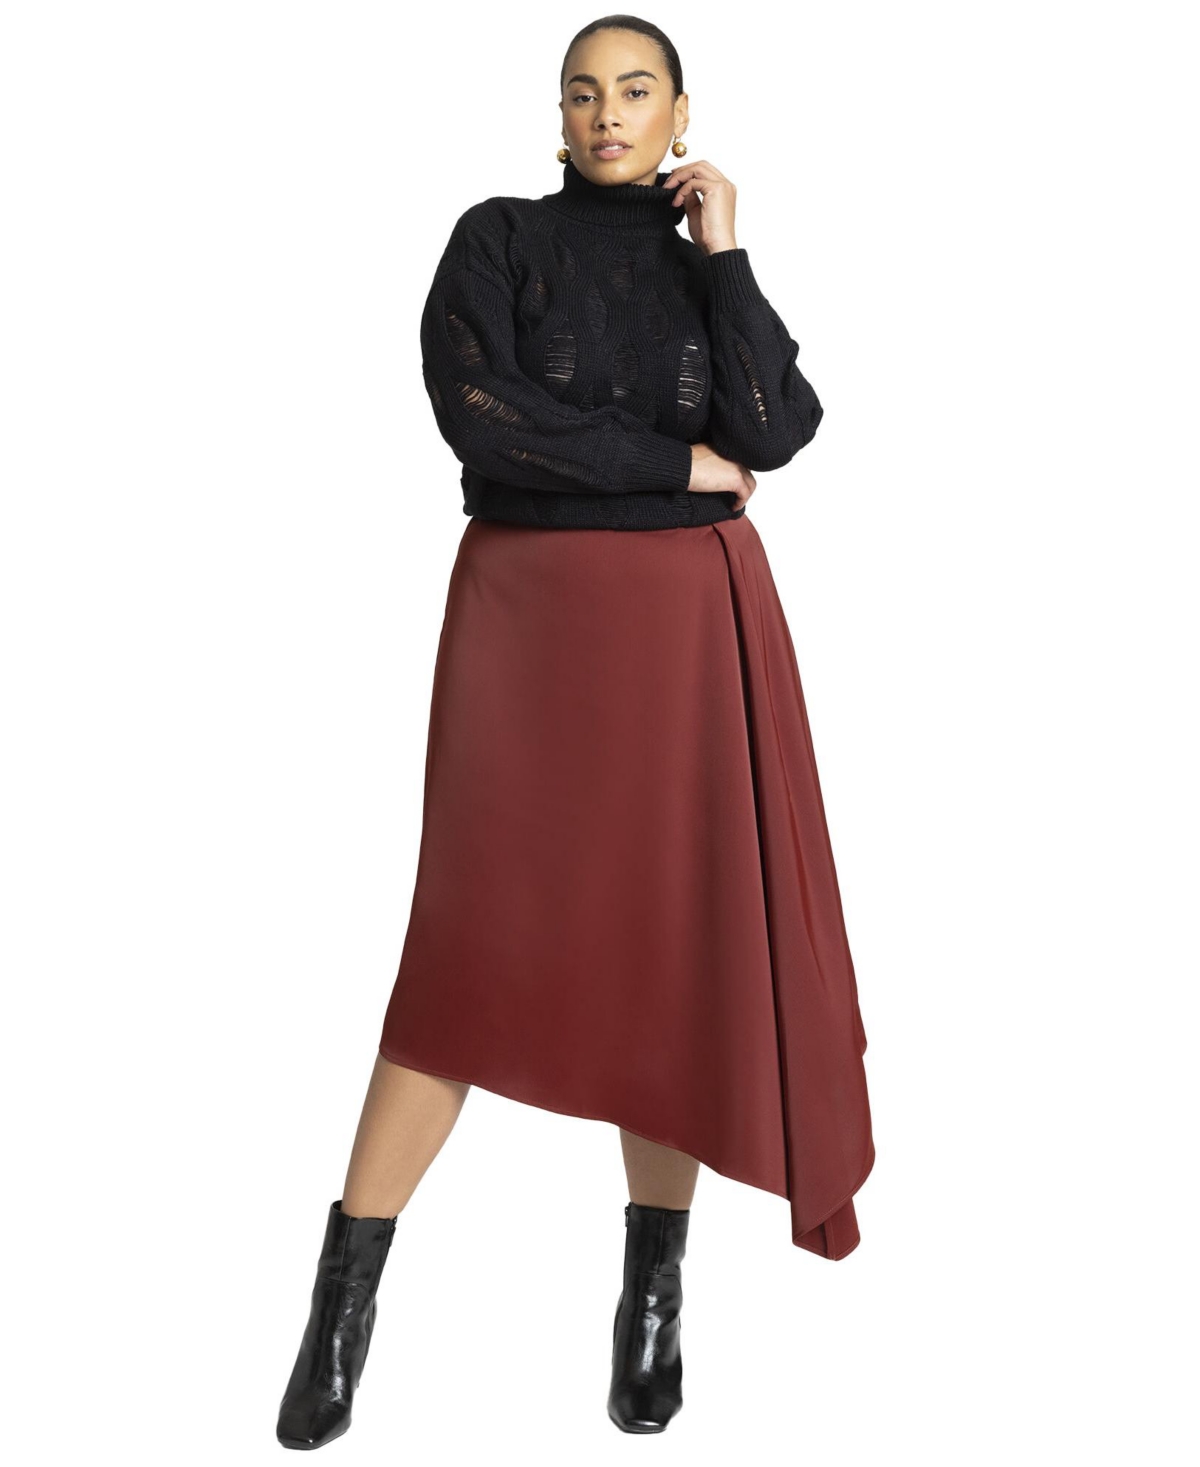 Plus Size Peaked Drape Skirt - Fired brick